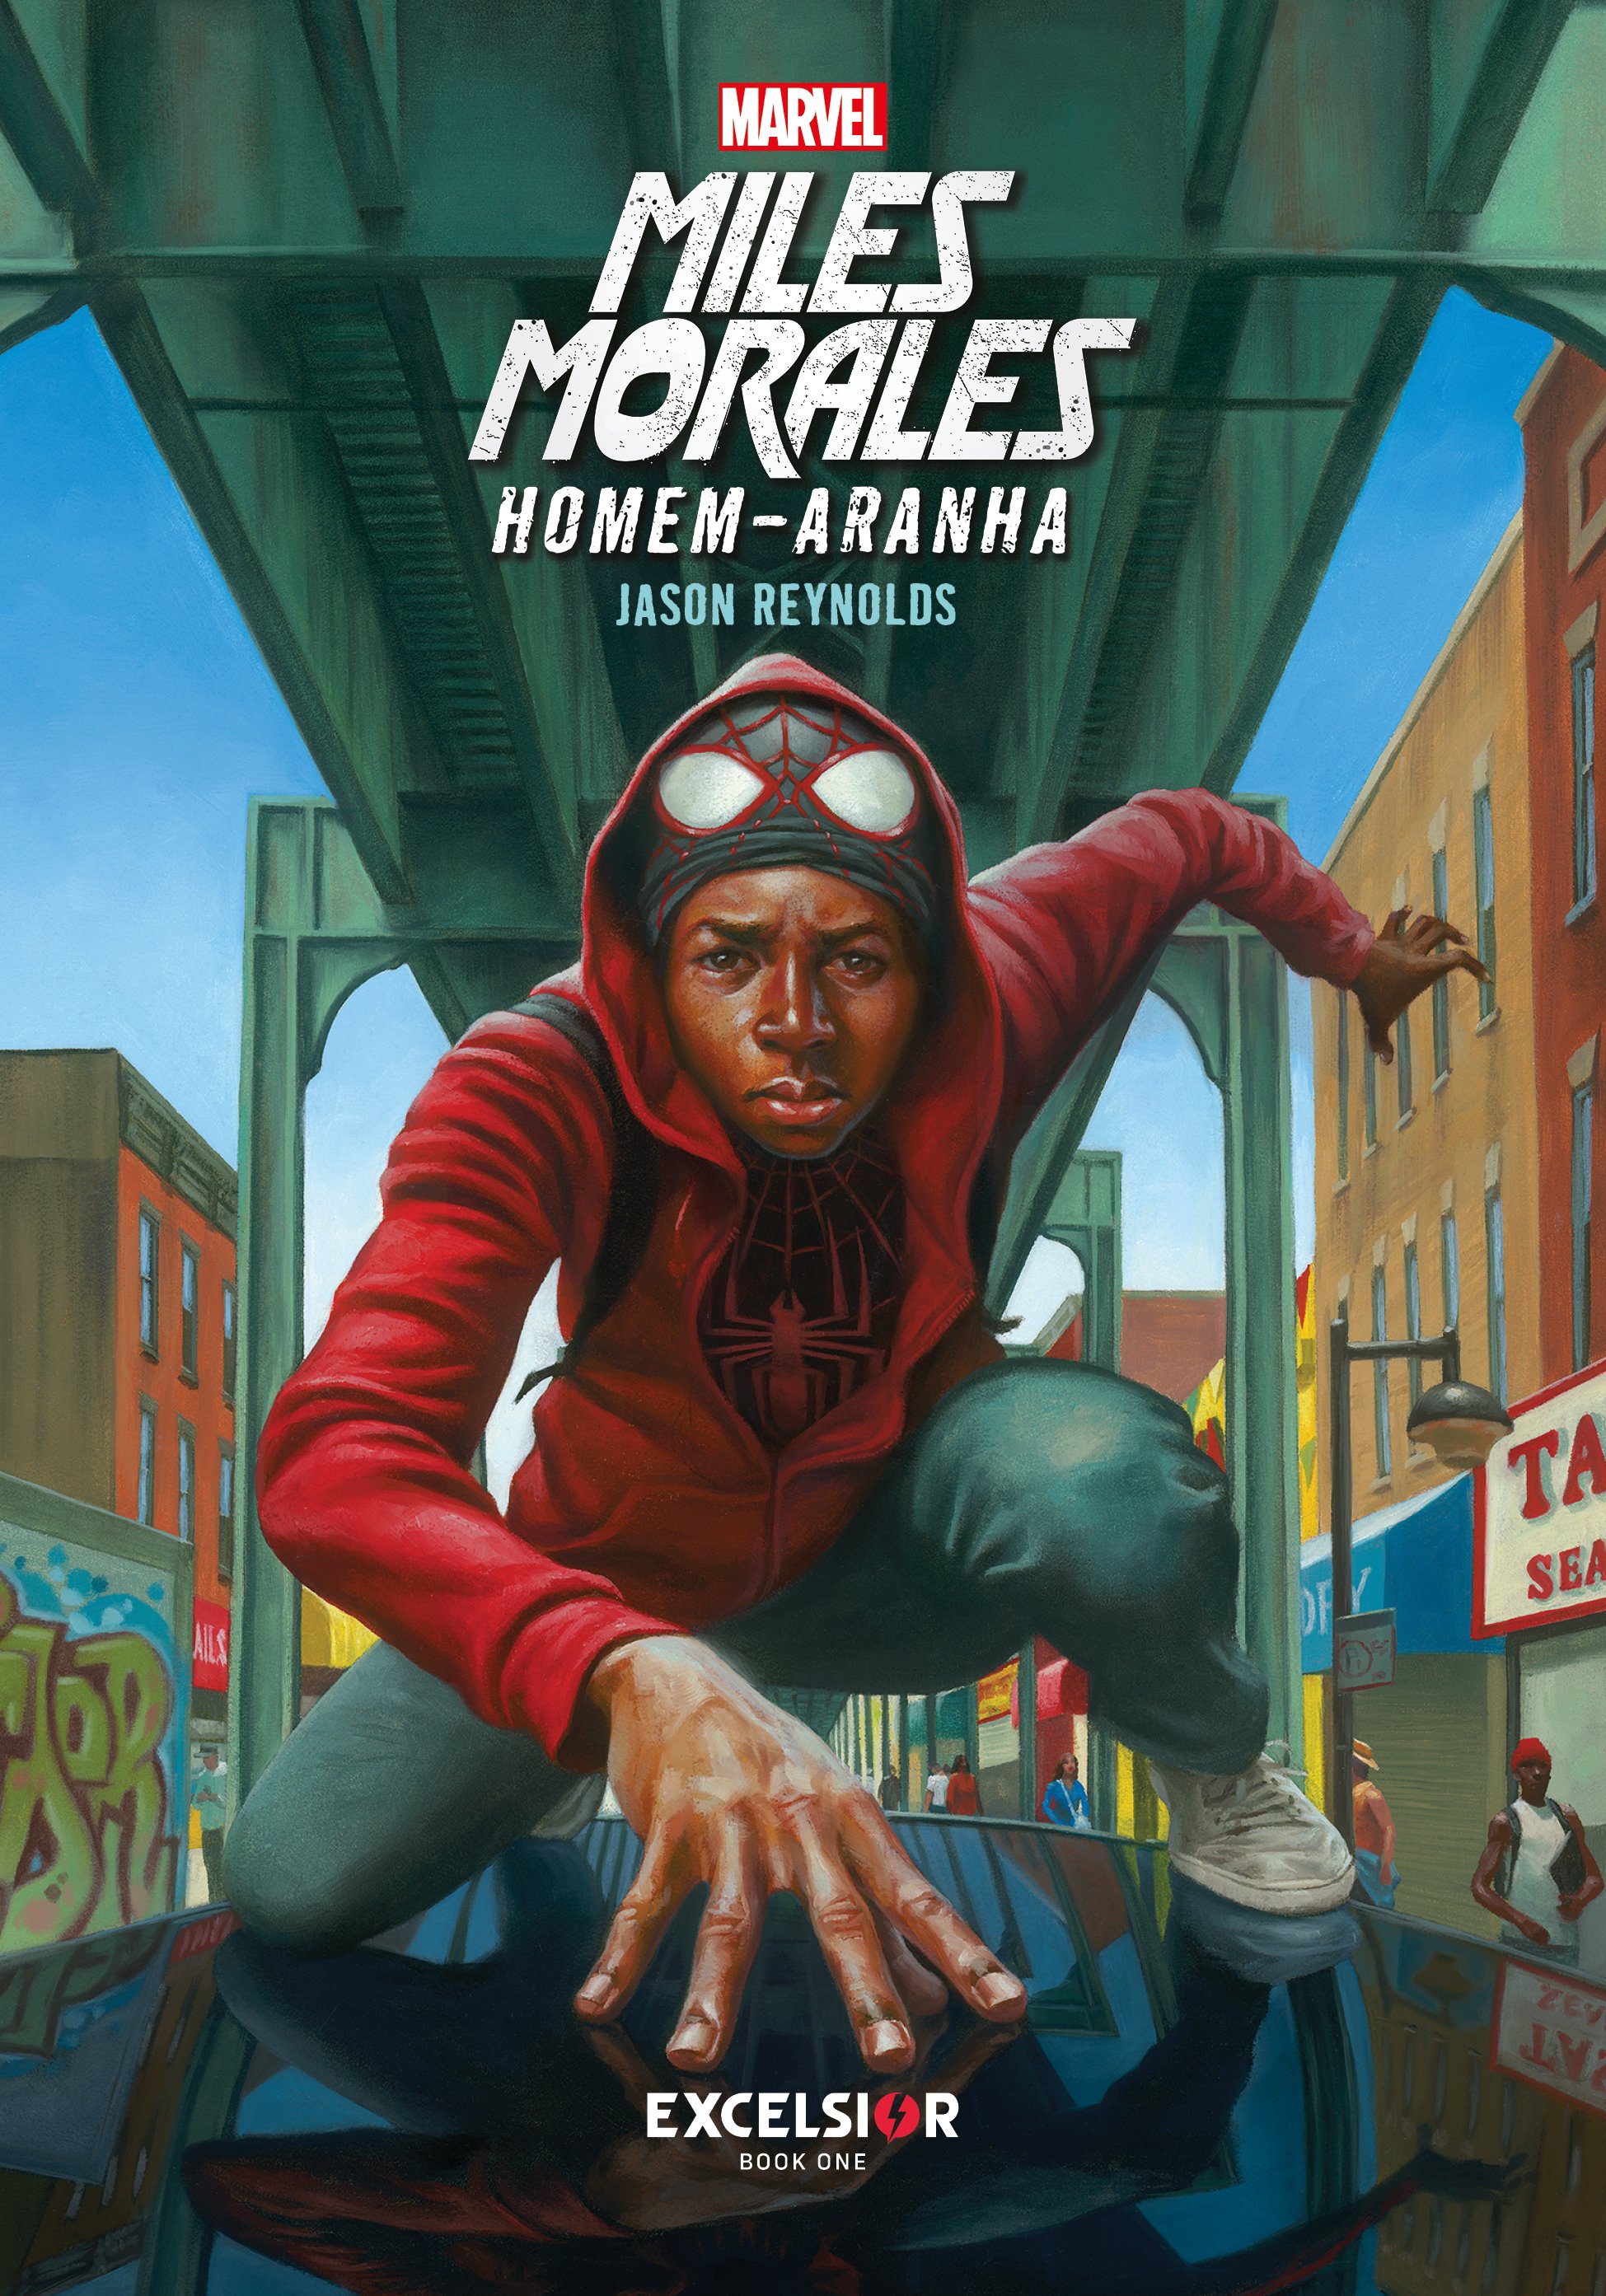 Homem-aranha - Miles Morales